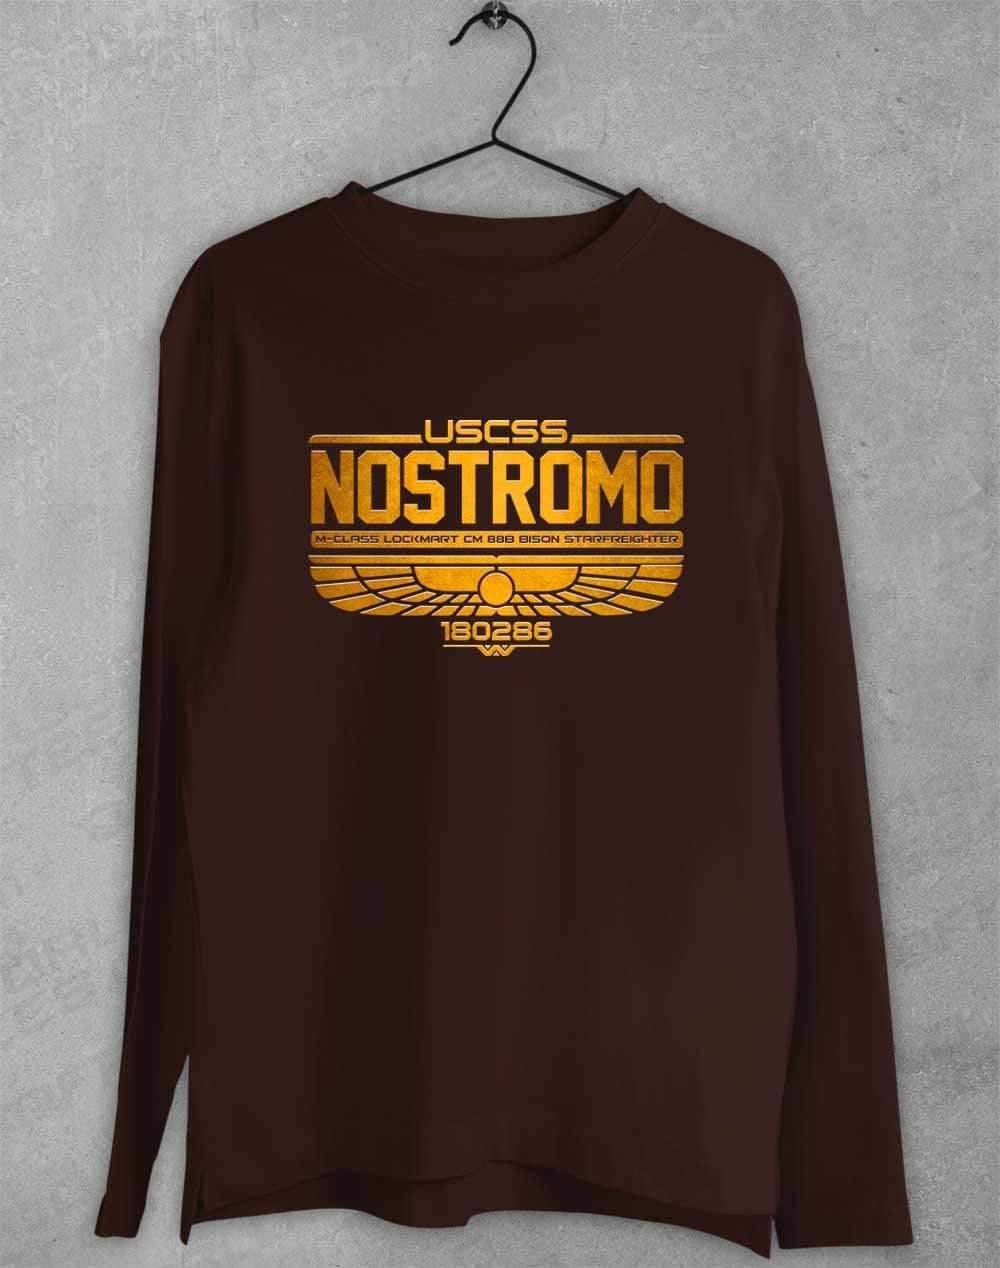 USCSS Nostromo Long Sleeve T-Shirt S / Dark Chocolate  - Off World Tees